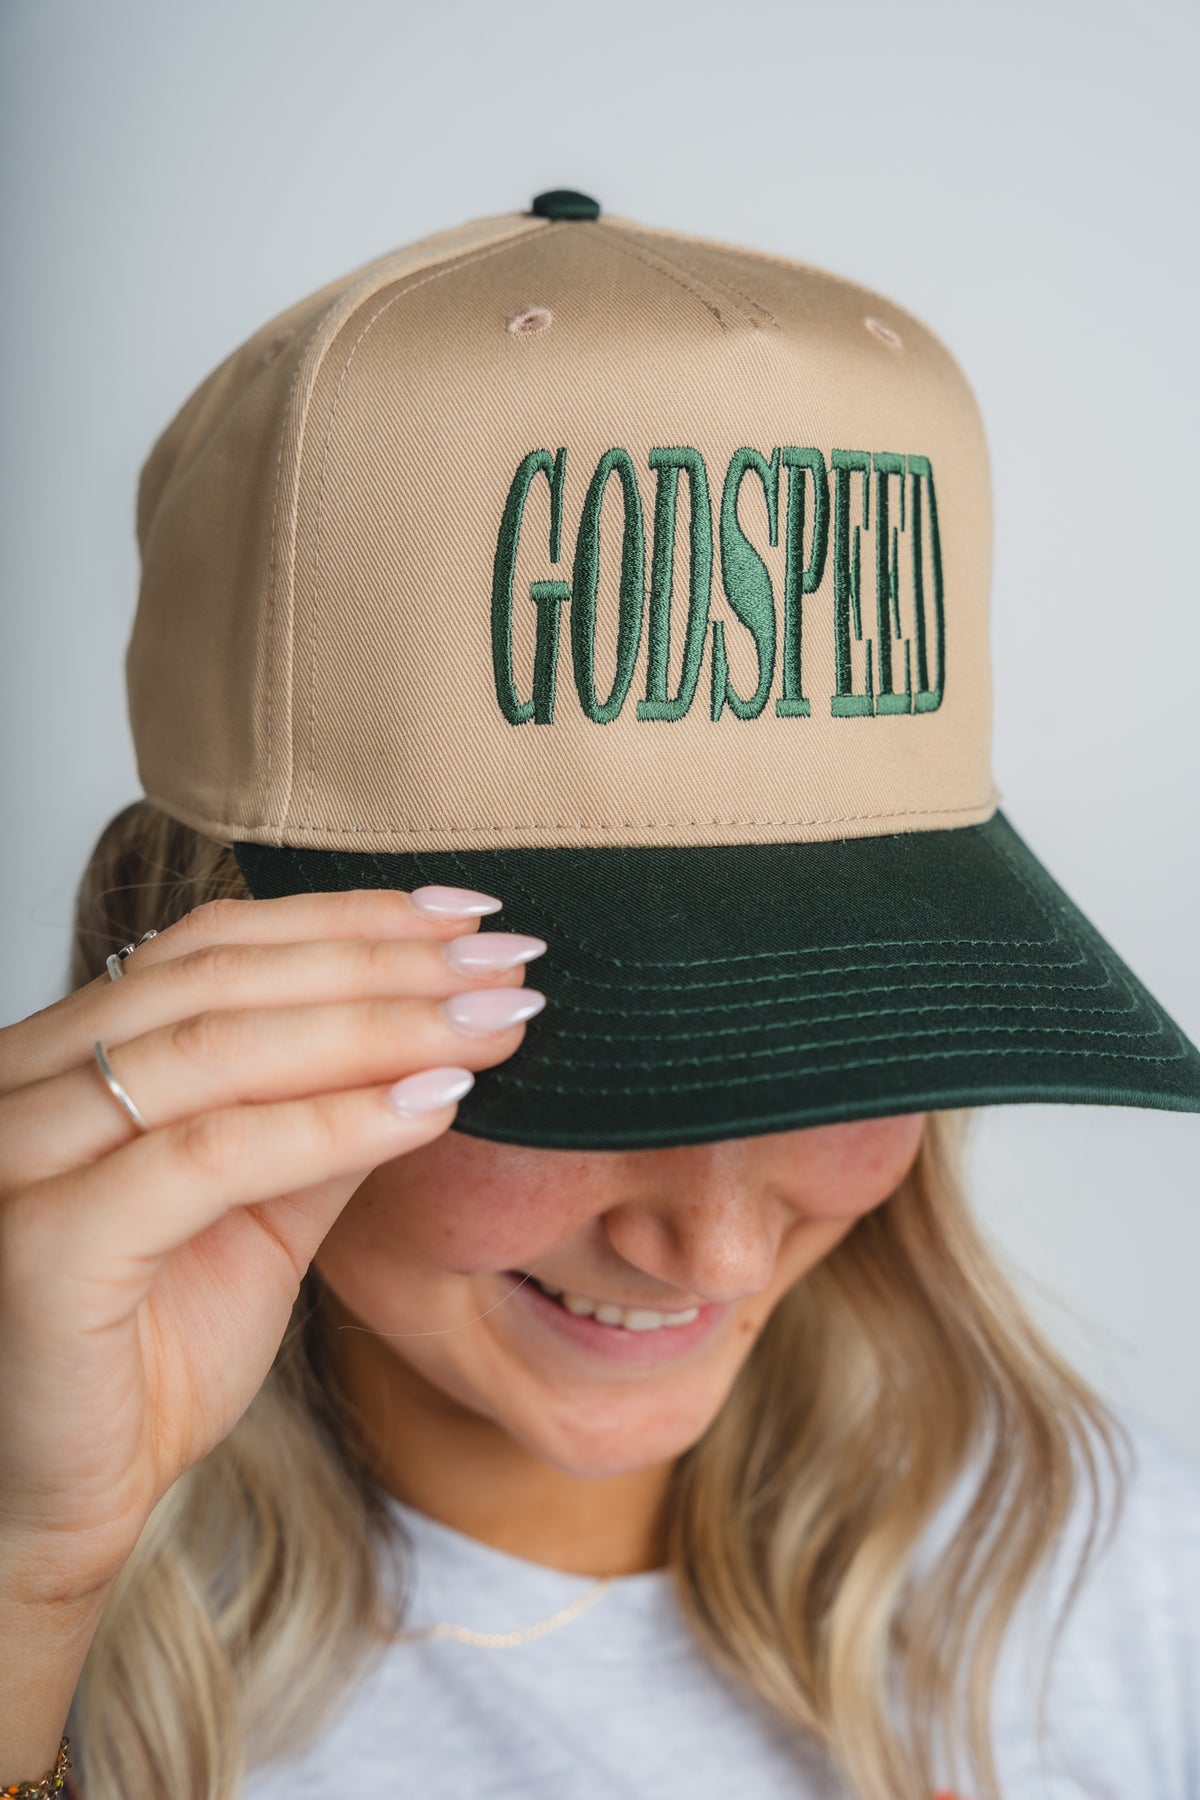 Godspeed vintage hat khaki/green - Trendy Hats at Lush Fashion Lounge Boutique in Oklahoma City